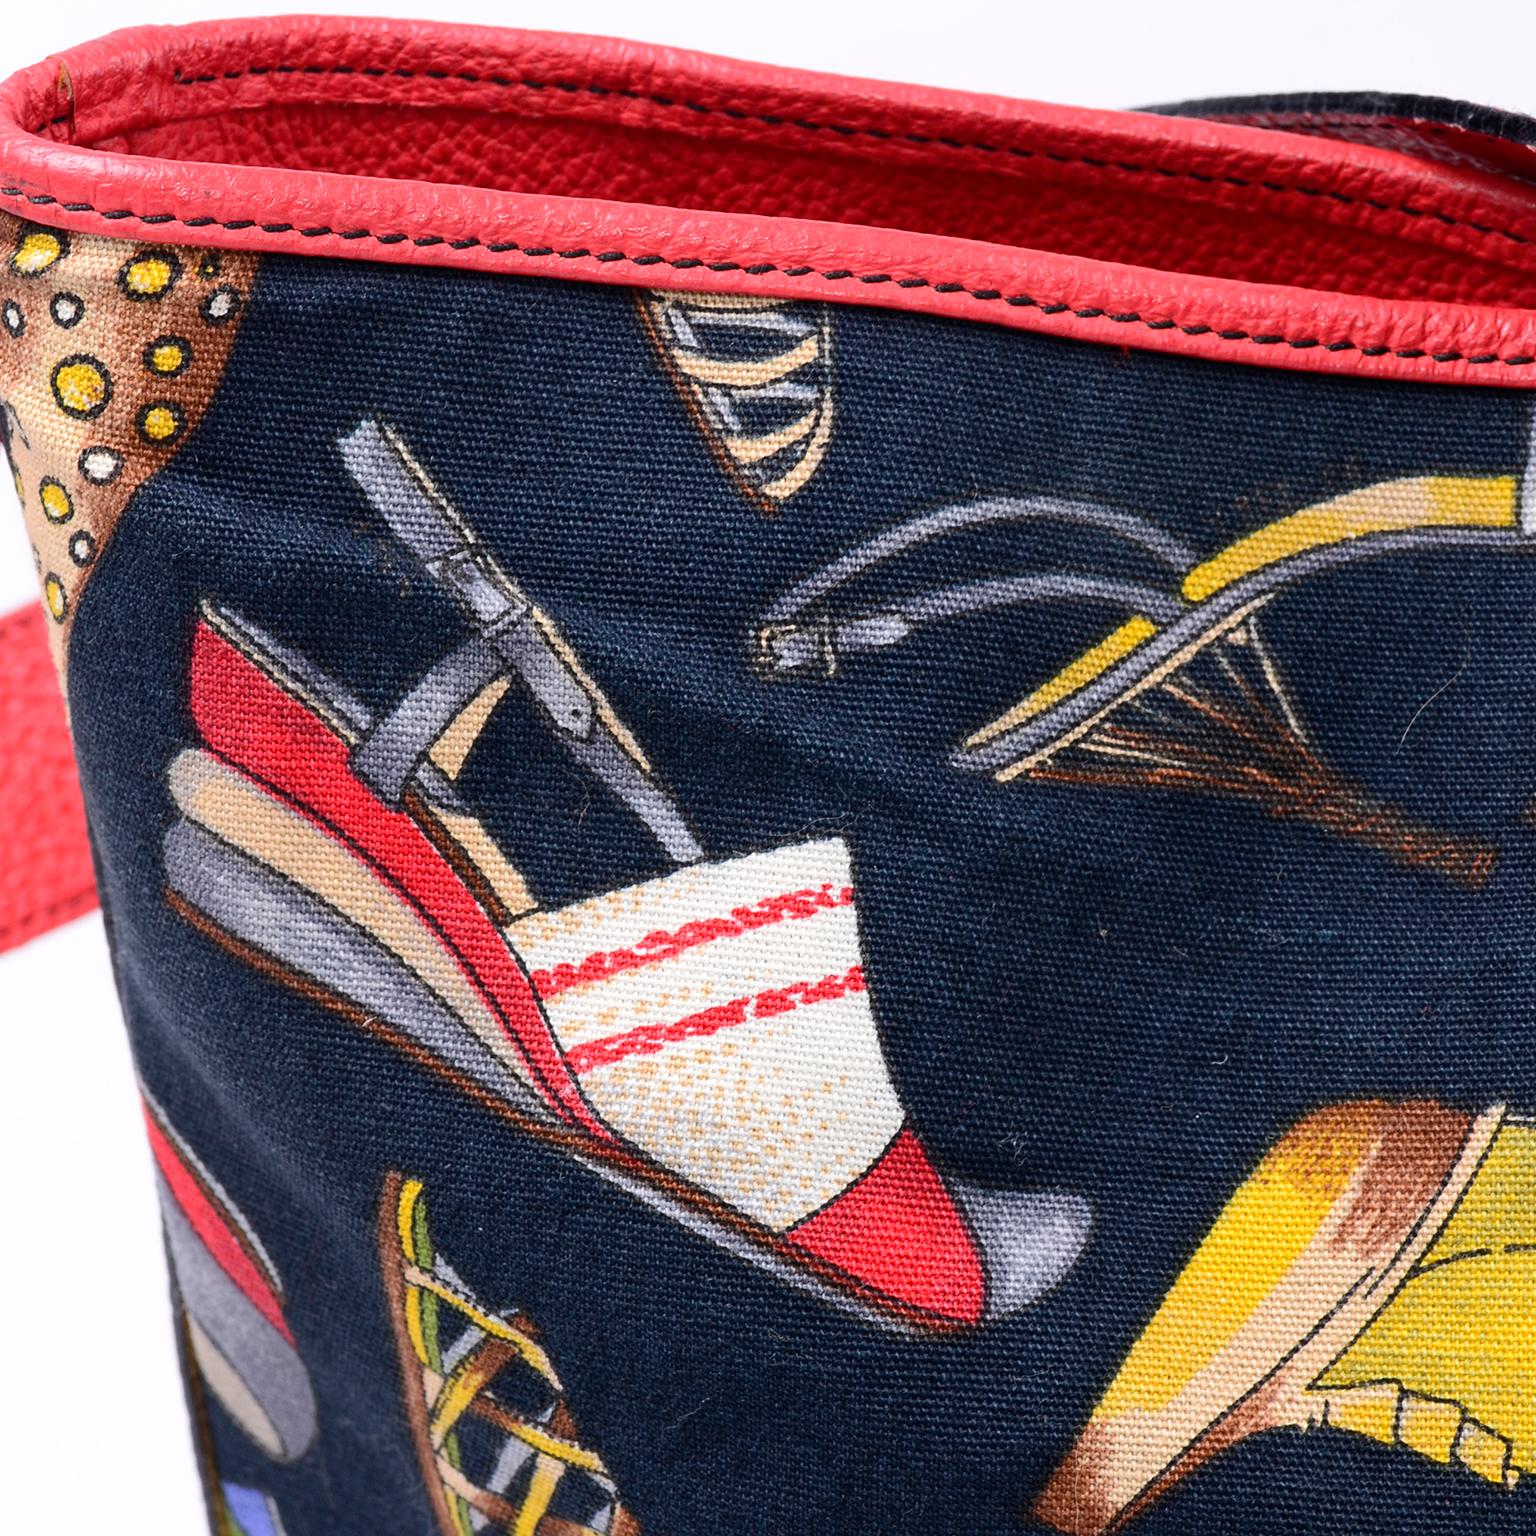 Salvatore Ferragamo Bucket Bag Vintage Handbag Shoe Print Shoulder Bag 4